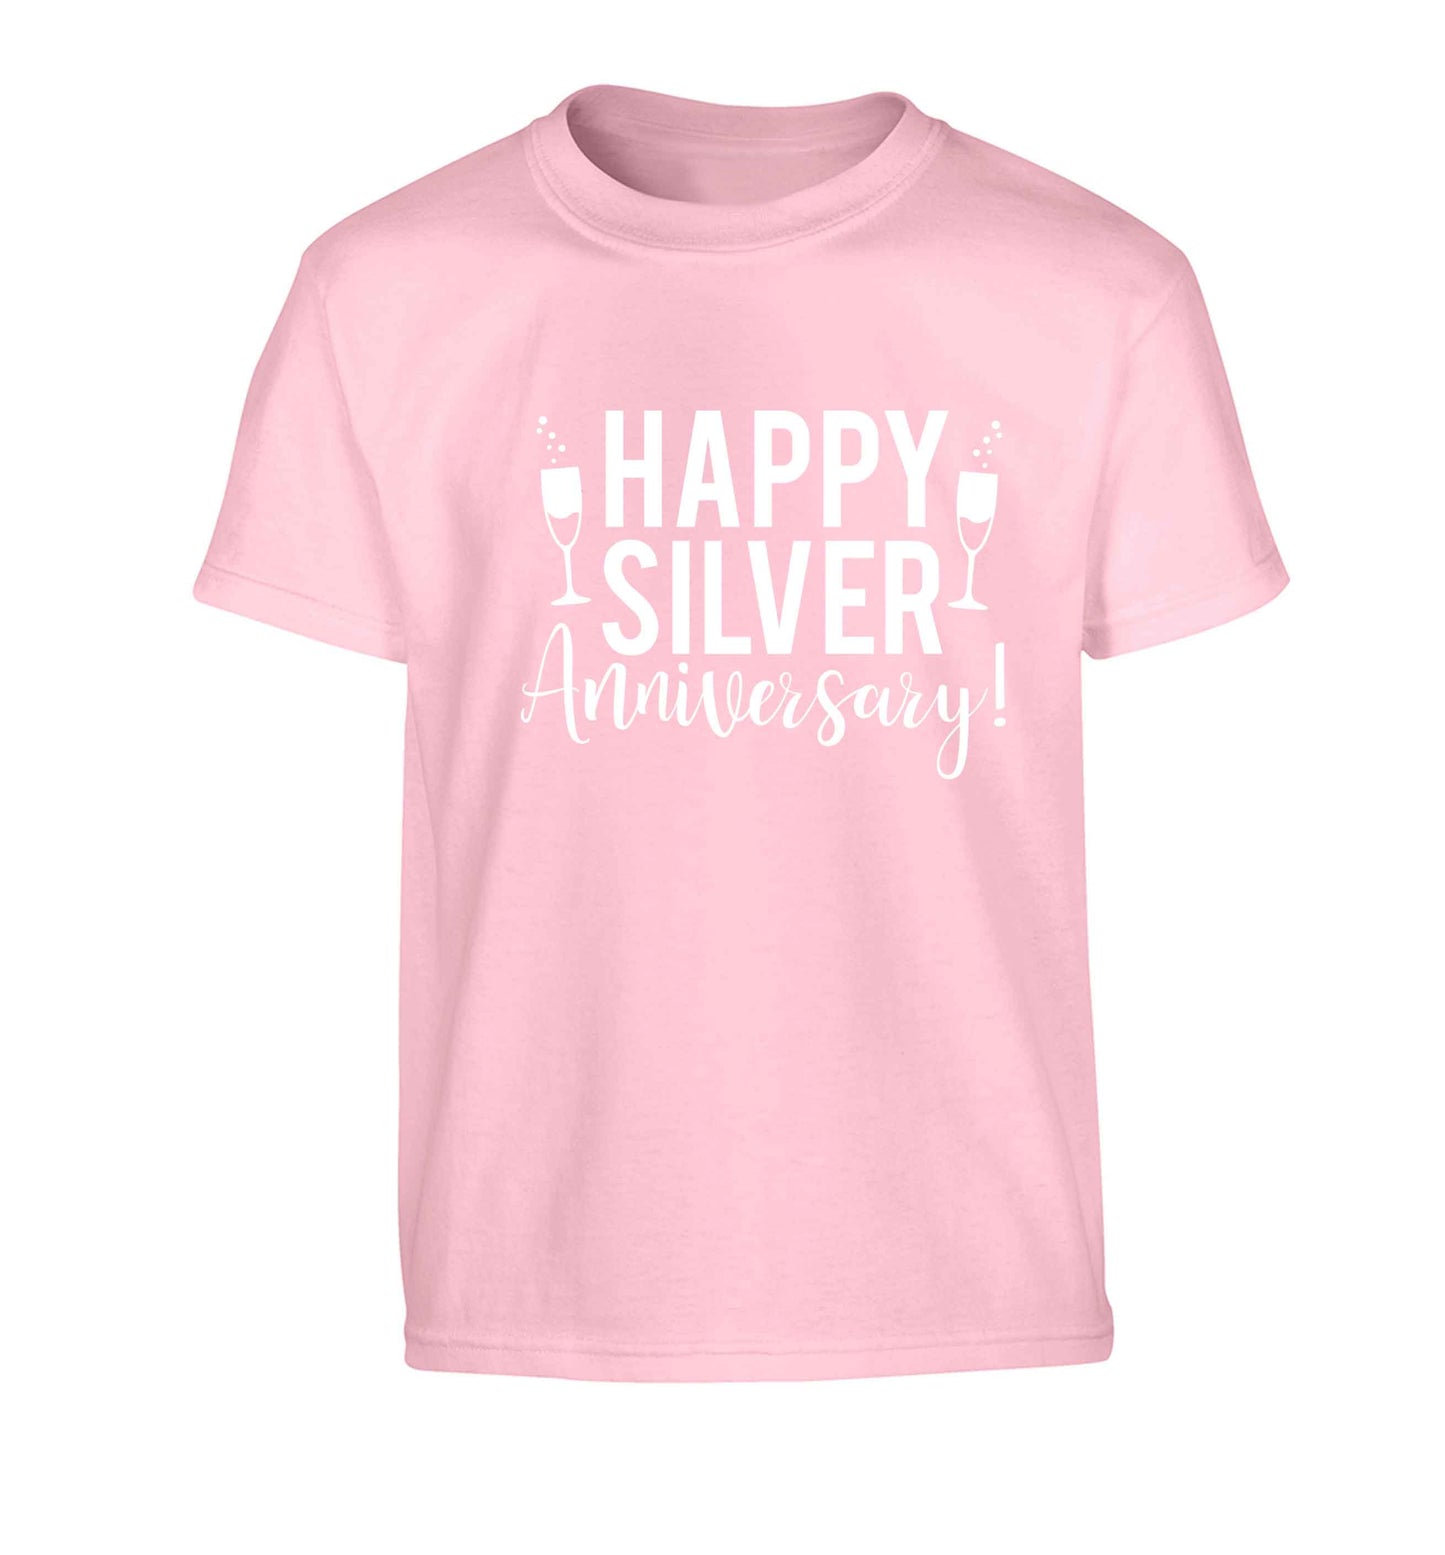 Happy silver anniversary! Children's light pink Tshirt 12-13 Years